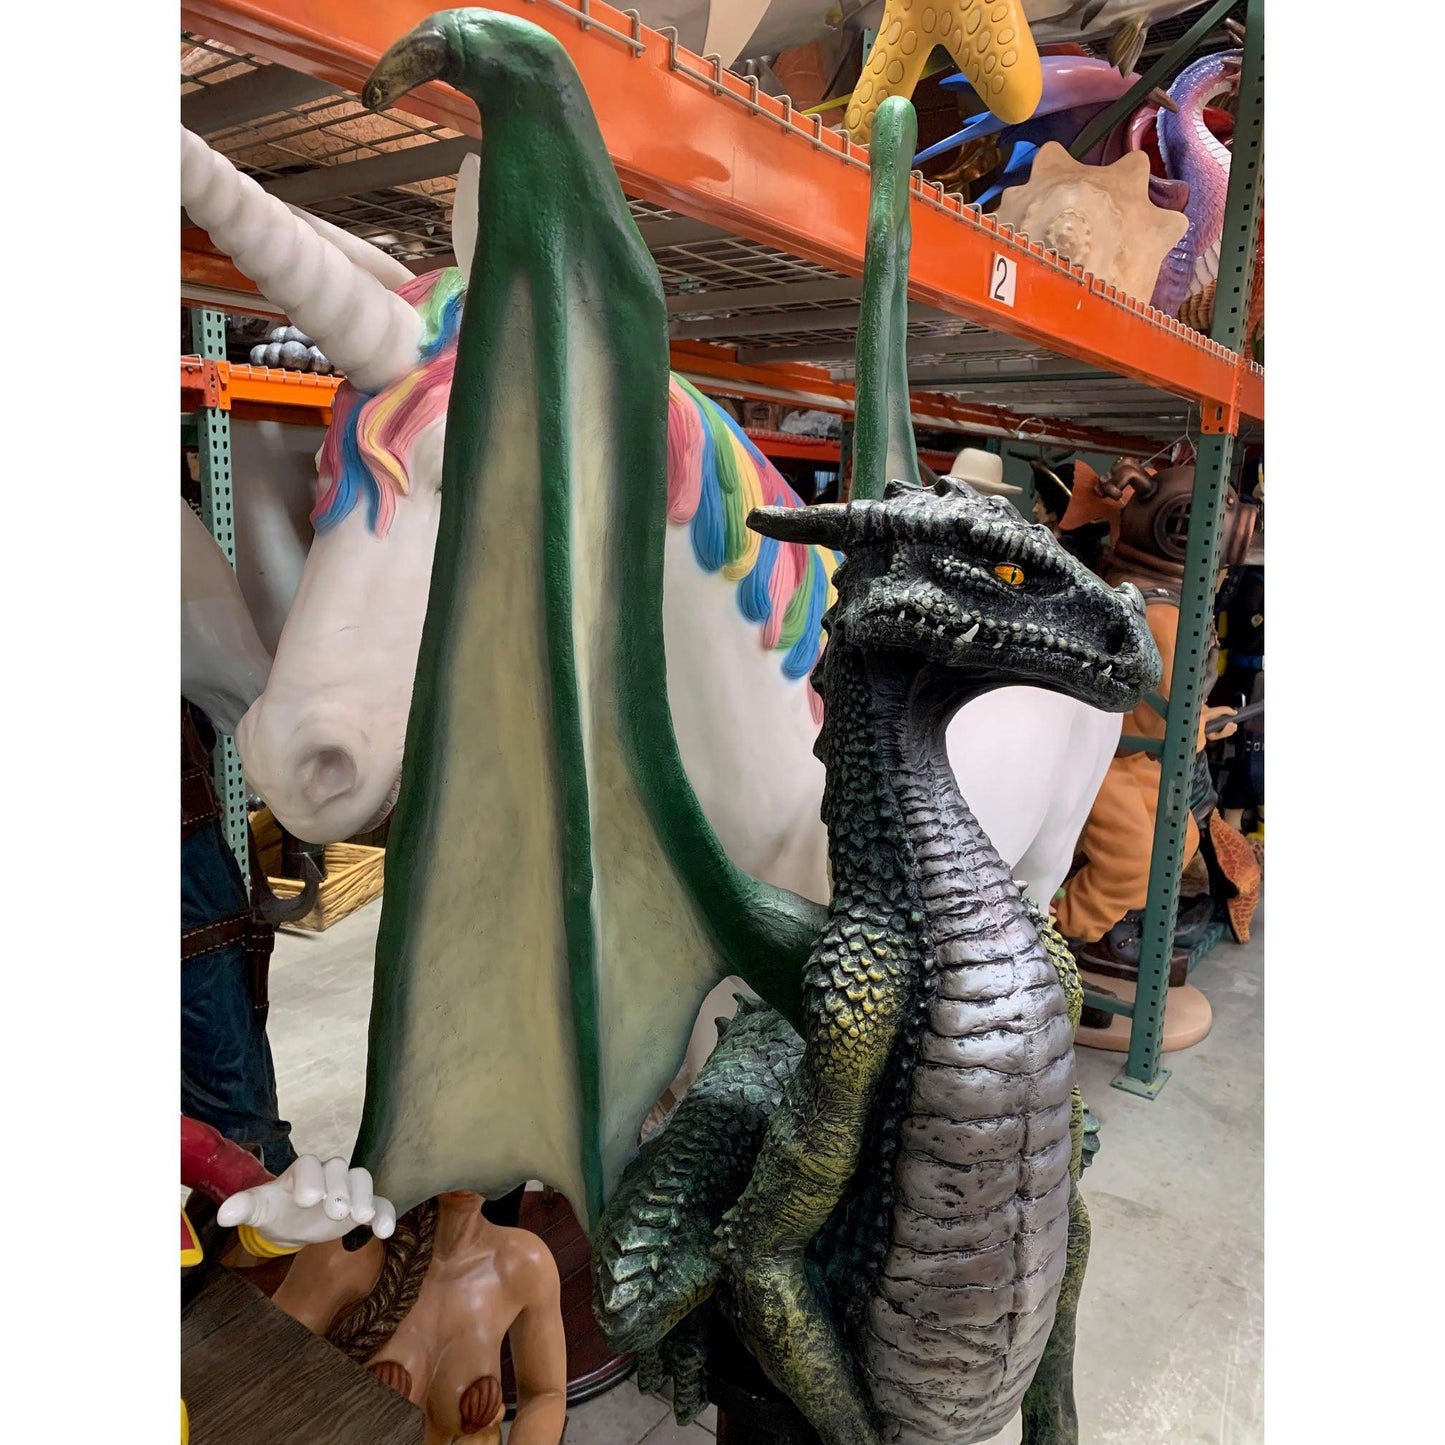 Green Dragon On Post Life Size Statue - LM Treasures Prop Rentals 